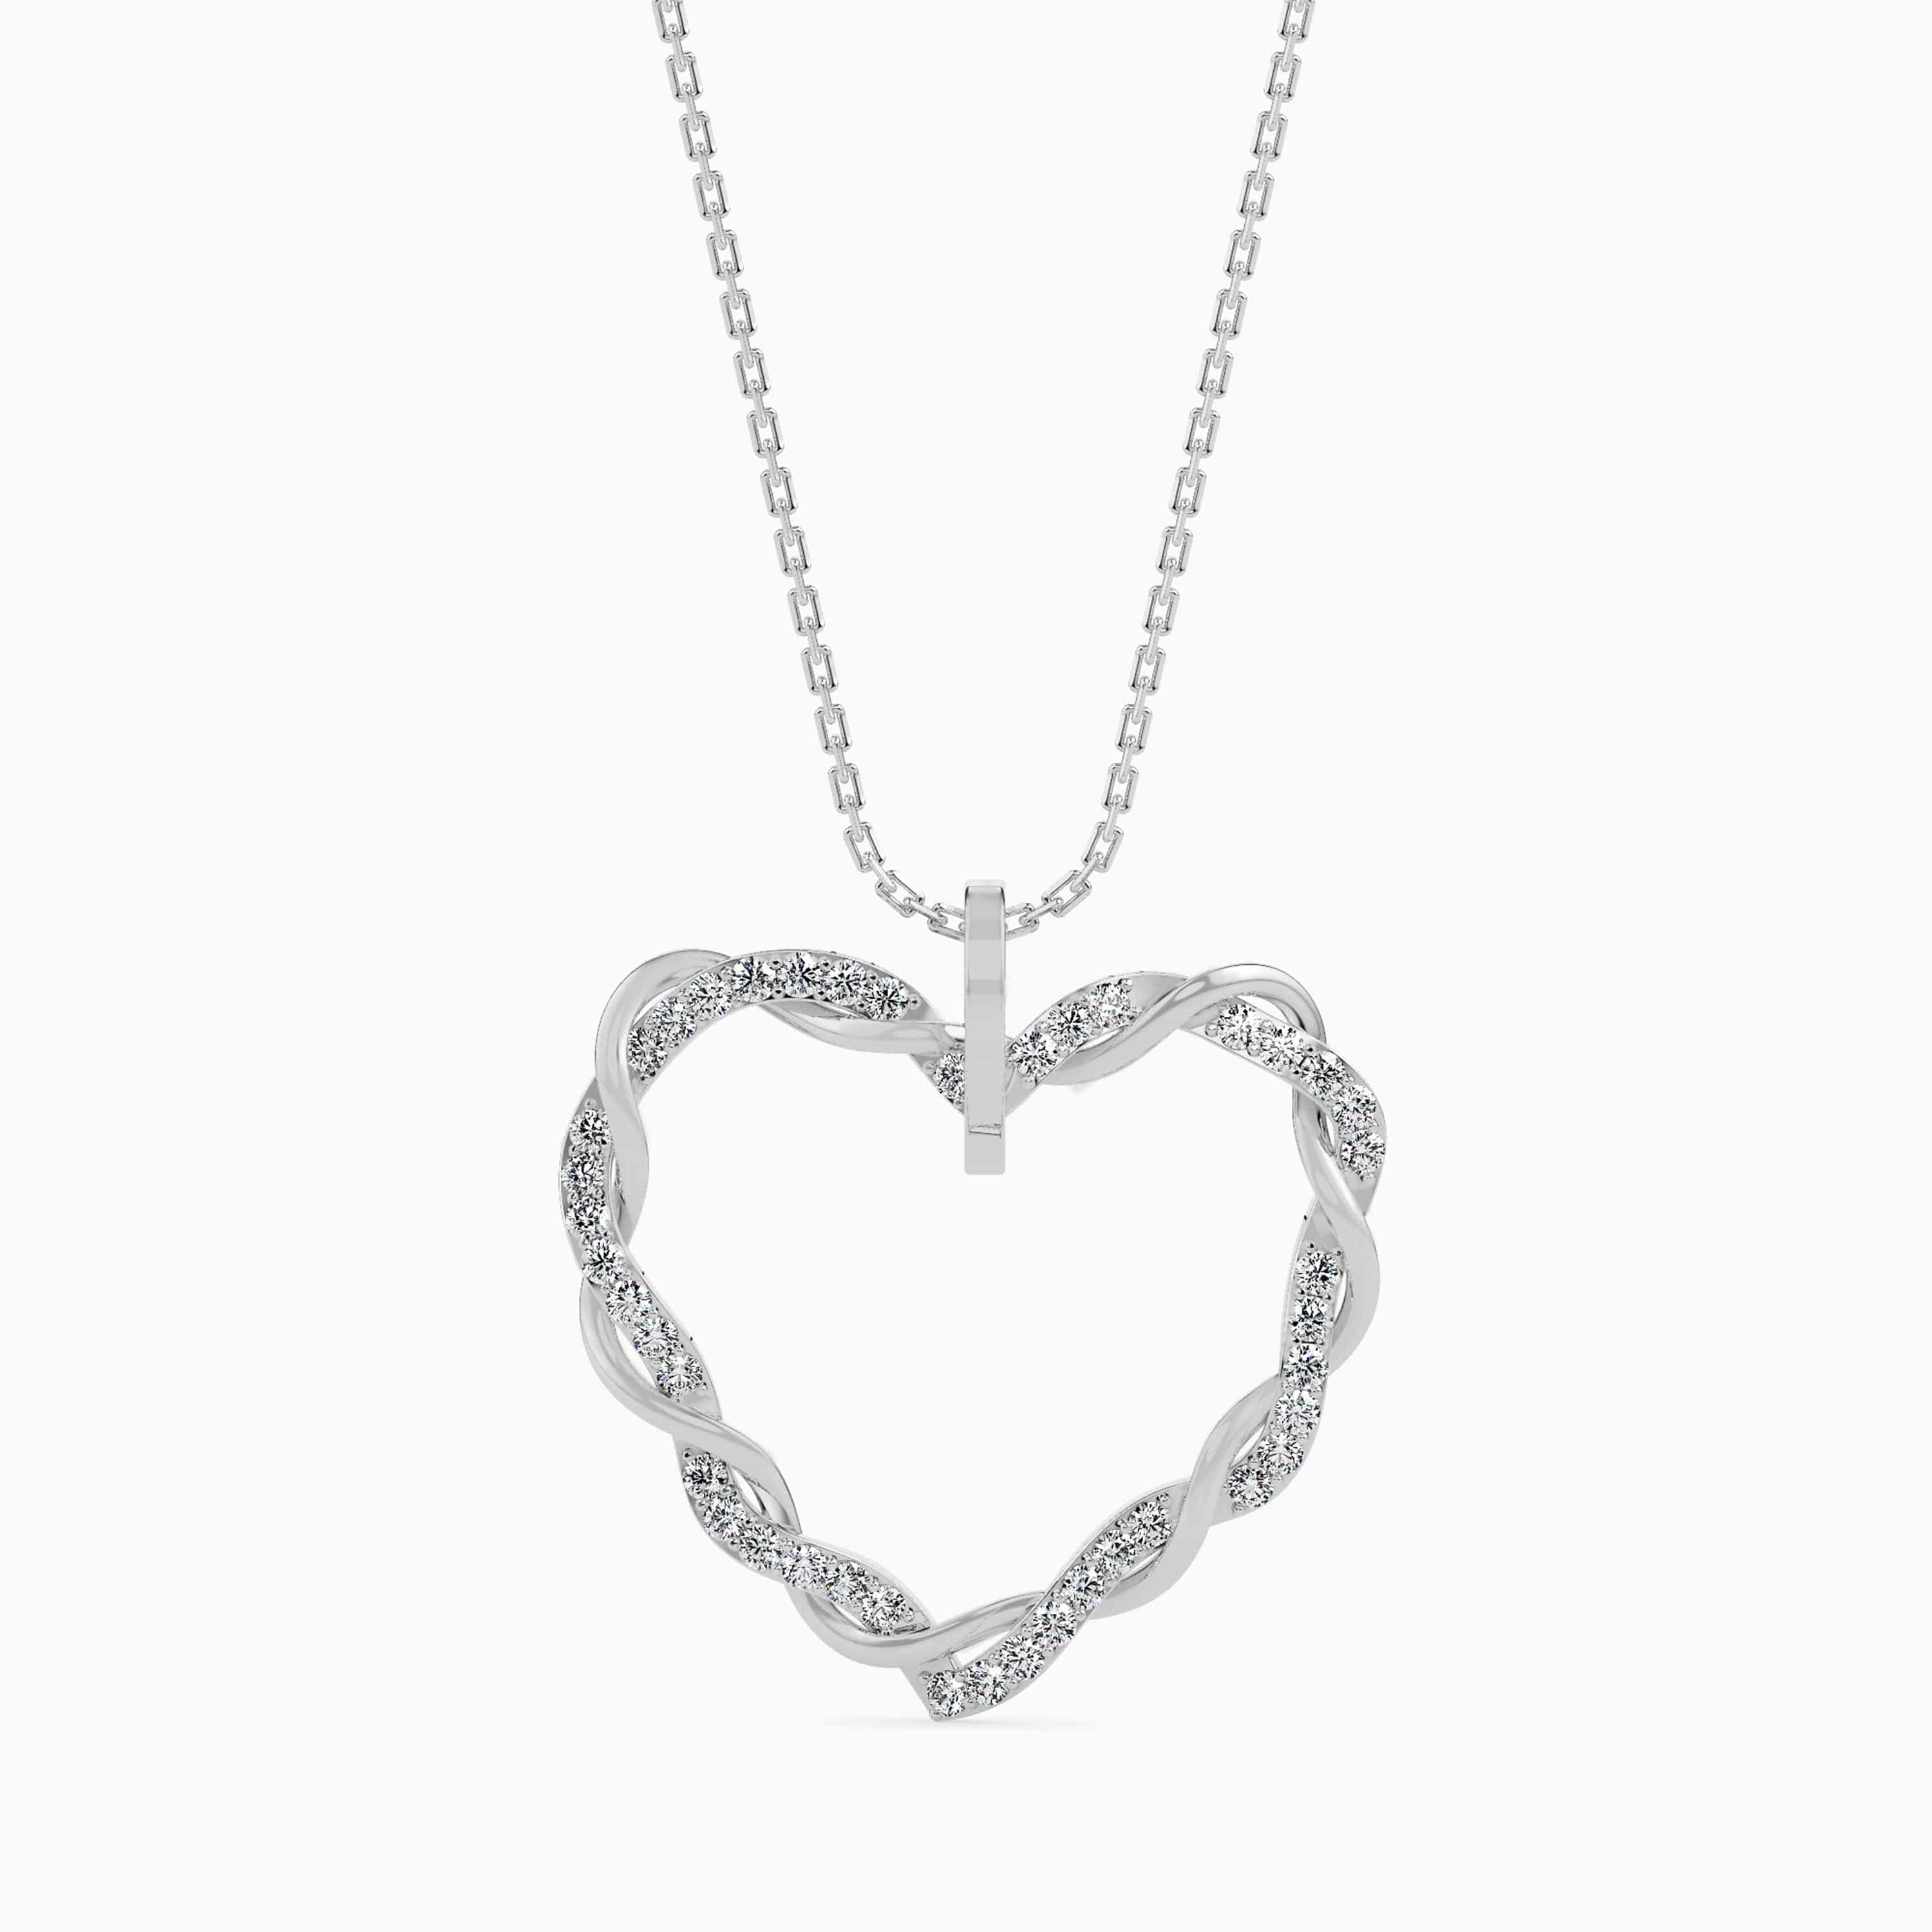 A sparkling Heart Diamond Necklace